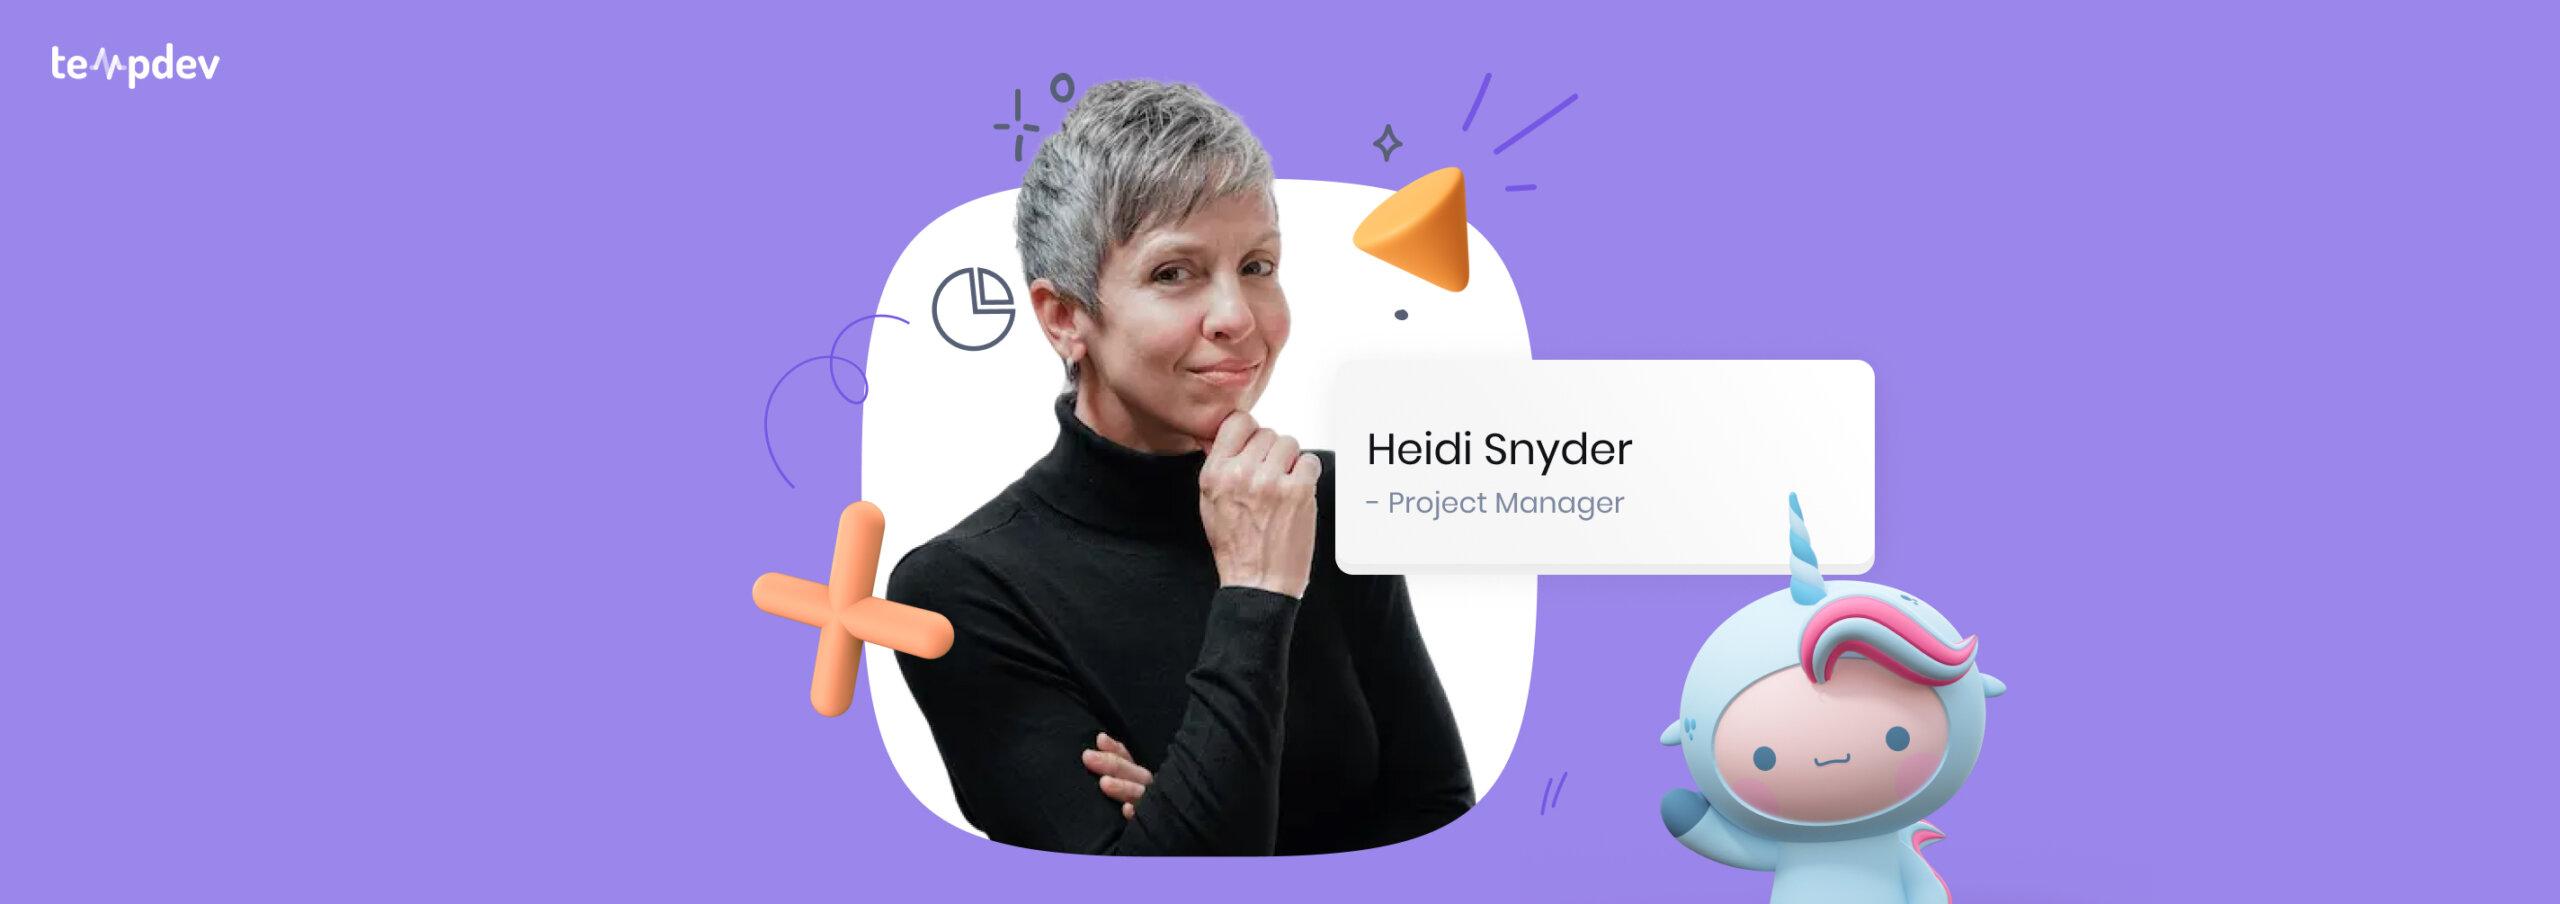 Meet Heidi Snyder: NextGen Project Manager